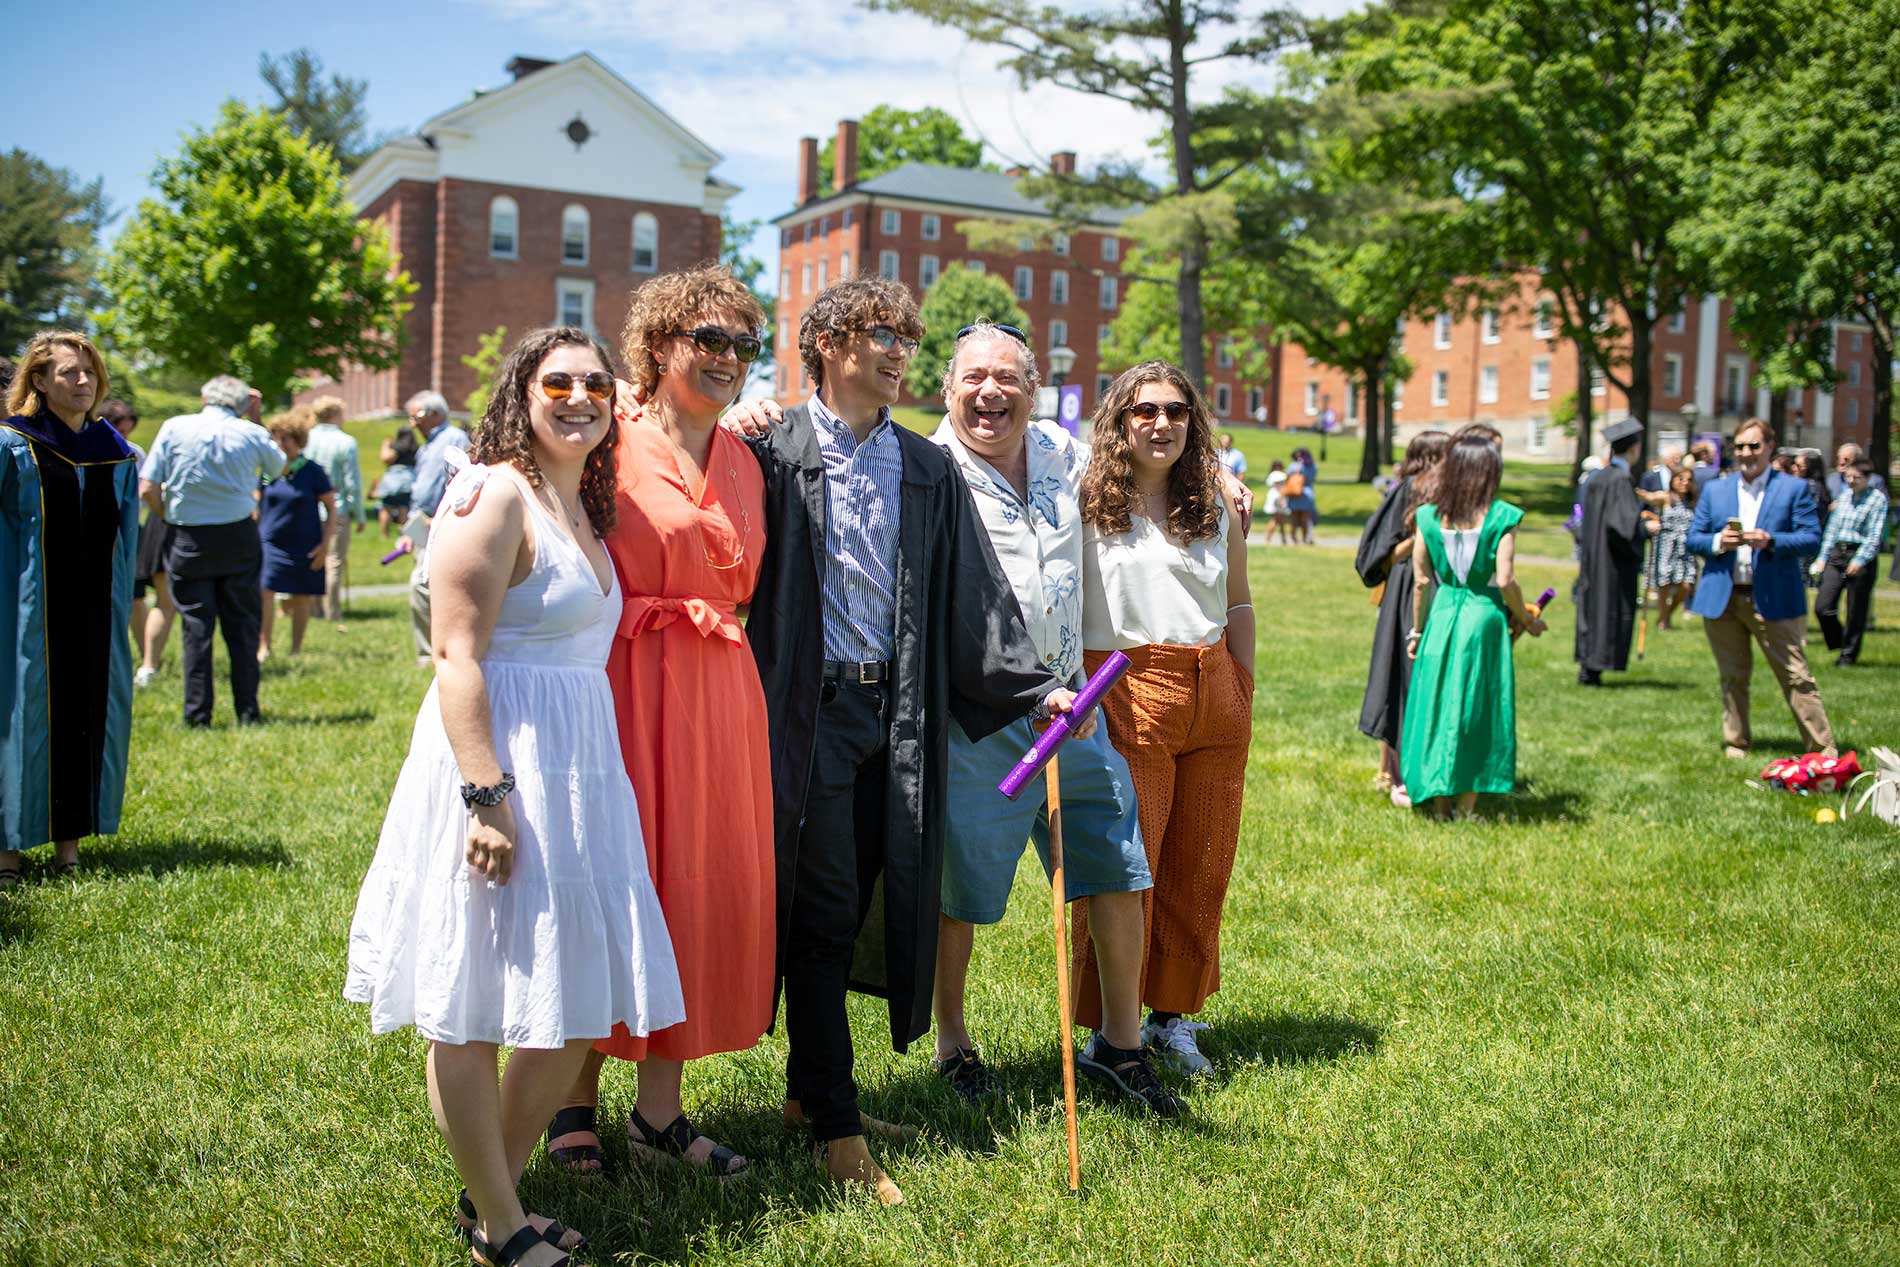 A family poses, celebrating graduation.